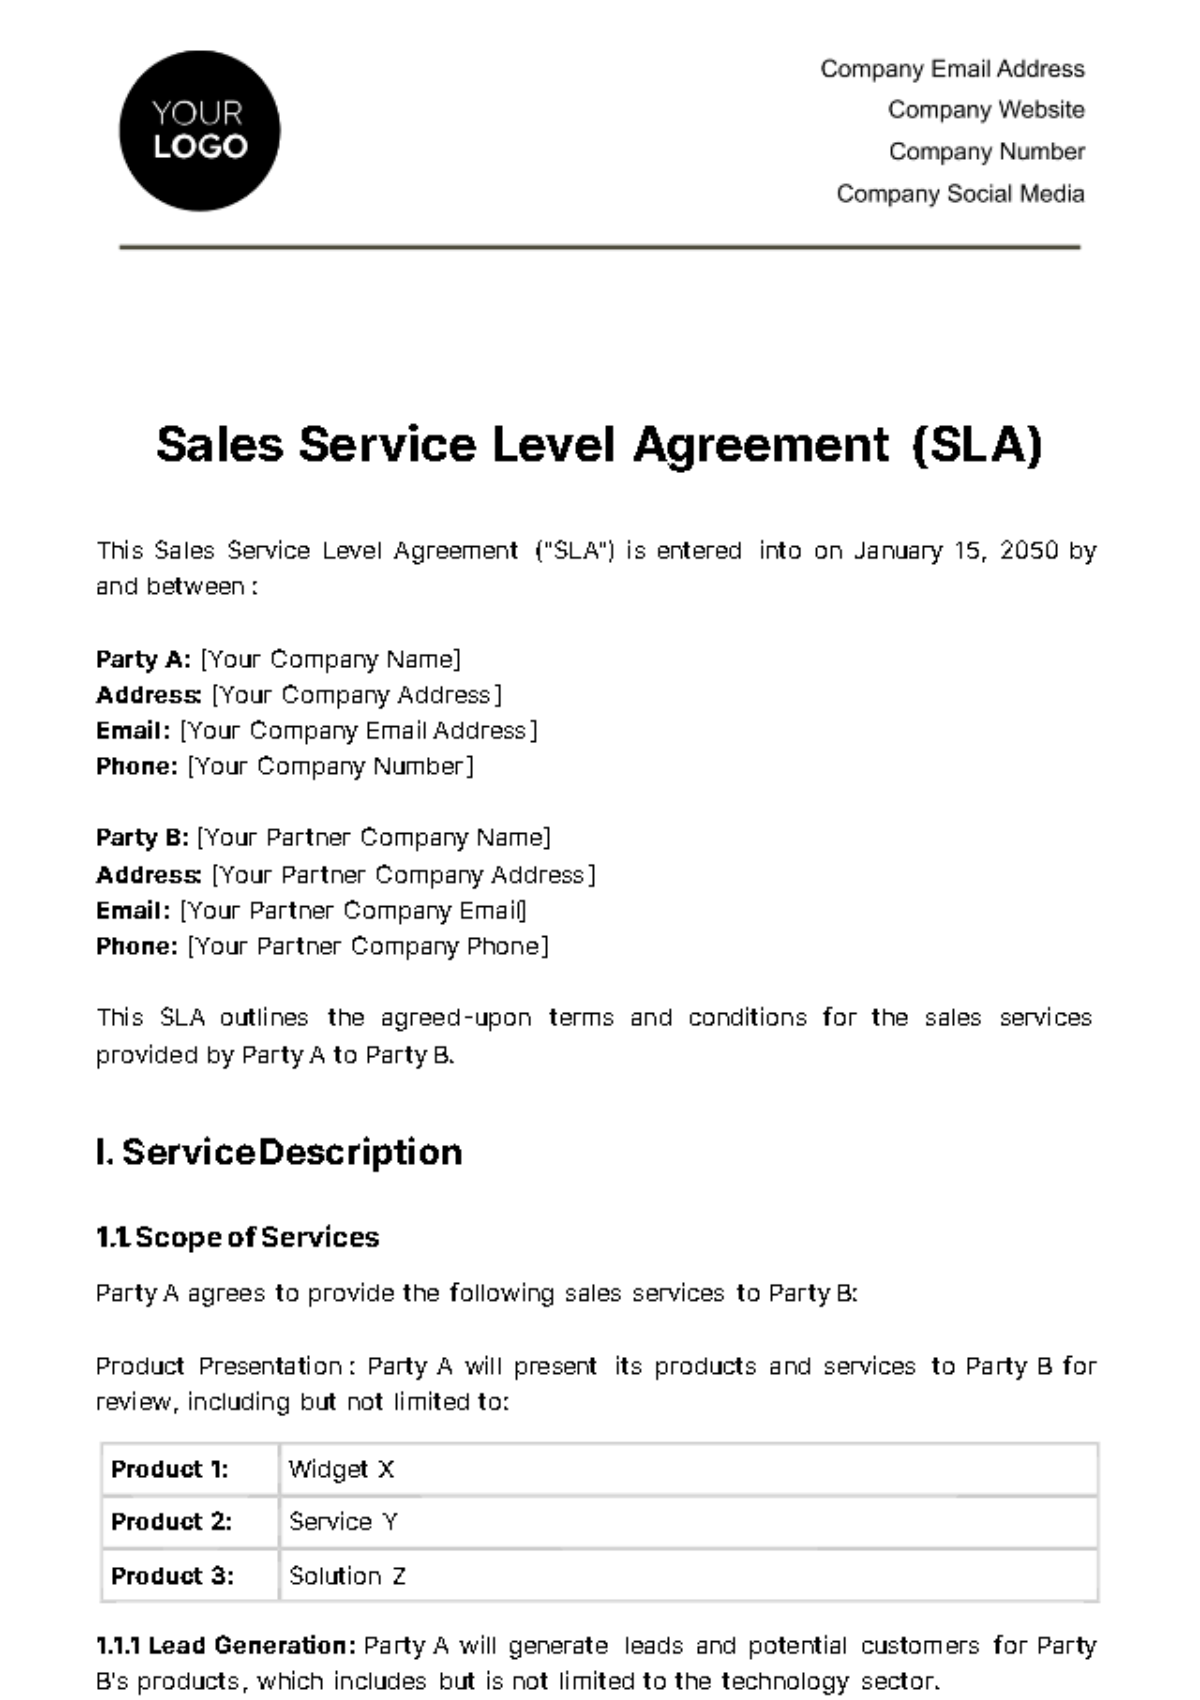 Sales Service Level Agreement (SLA) Template